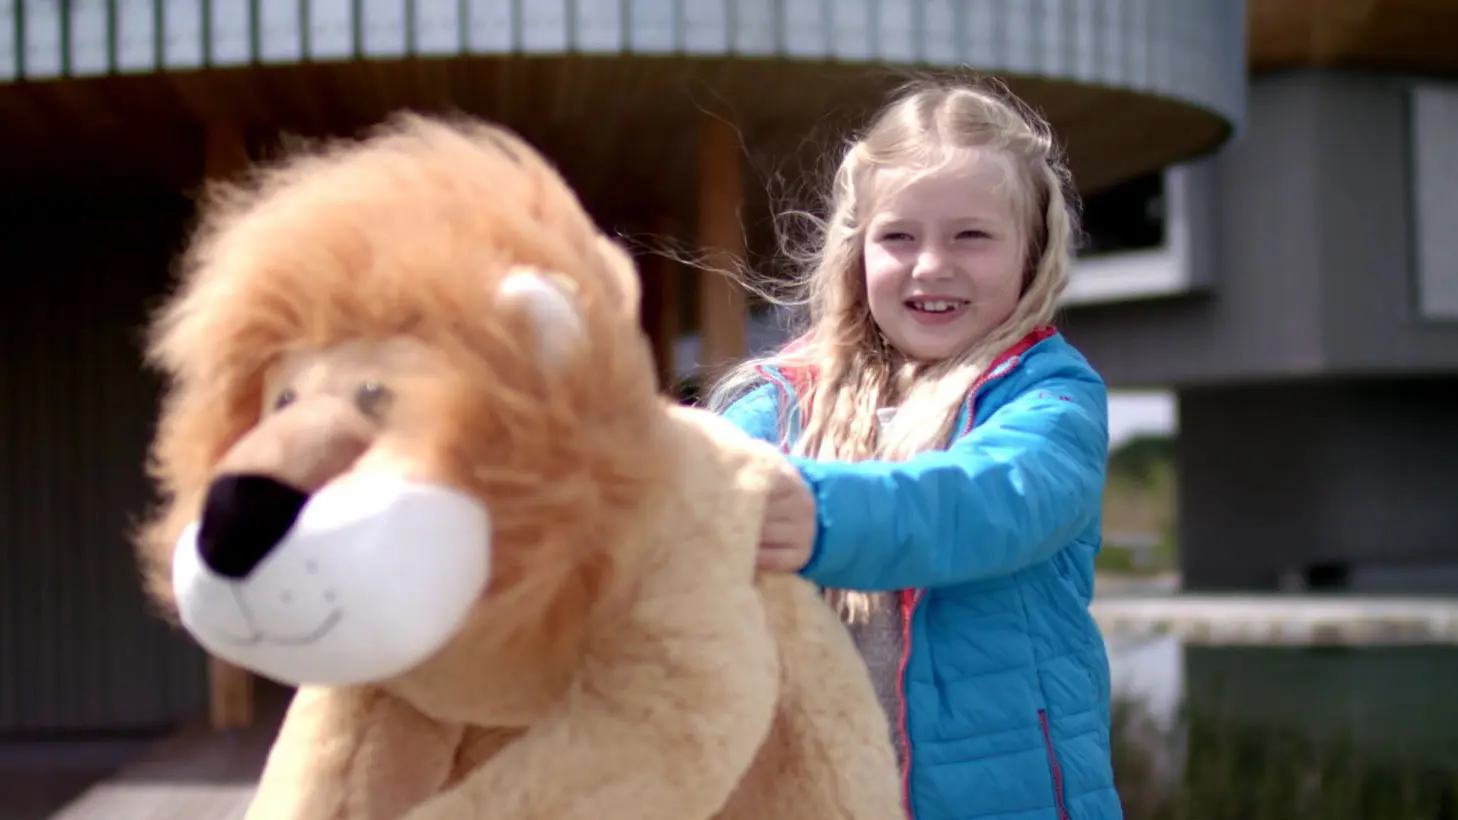 Smiling girl in blue jacket holds a large plush lion outdoors, showcasing Bürobewegt's creative visual marketing.